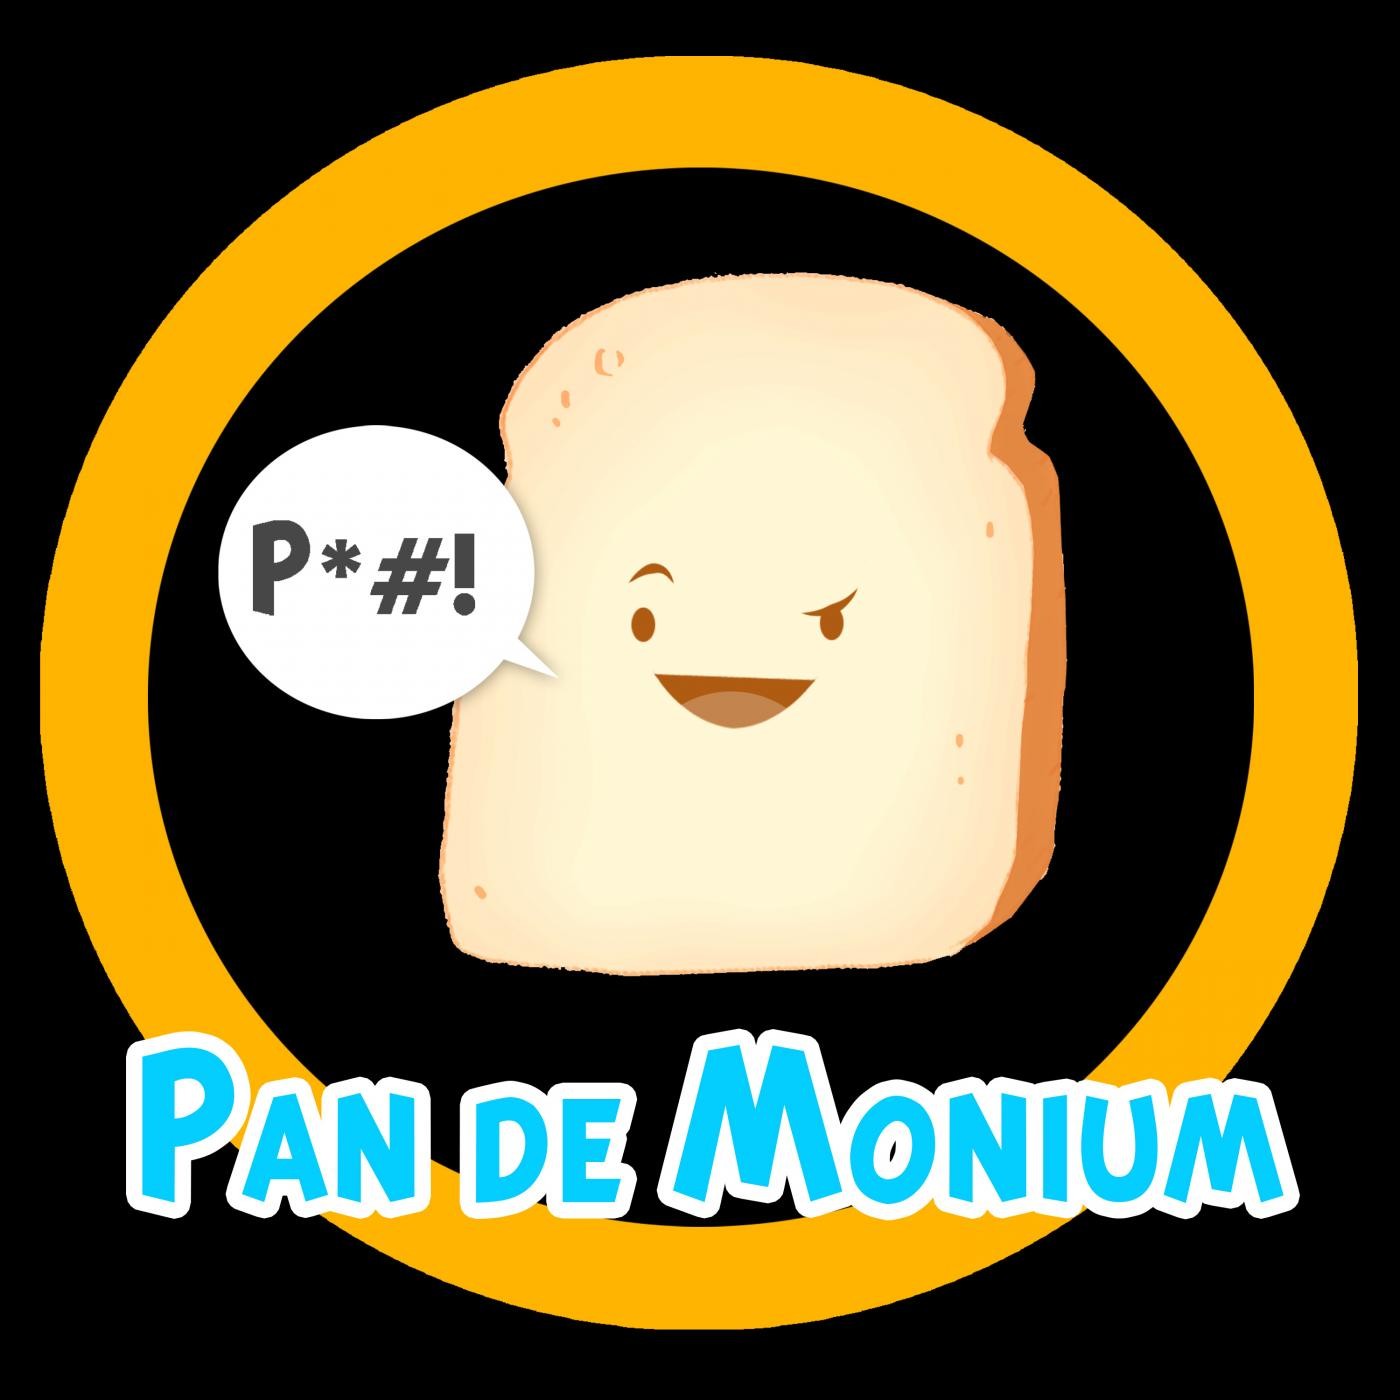 Pan de Monium